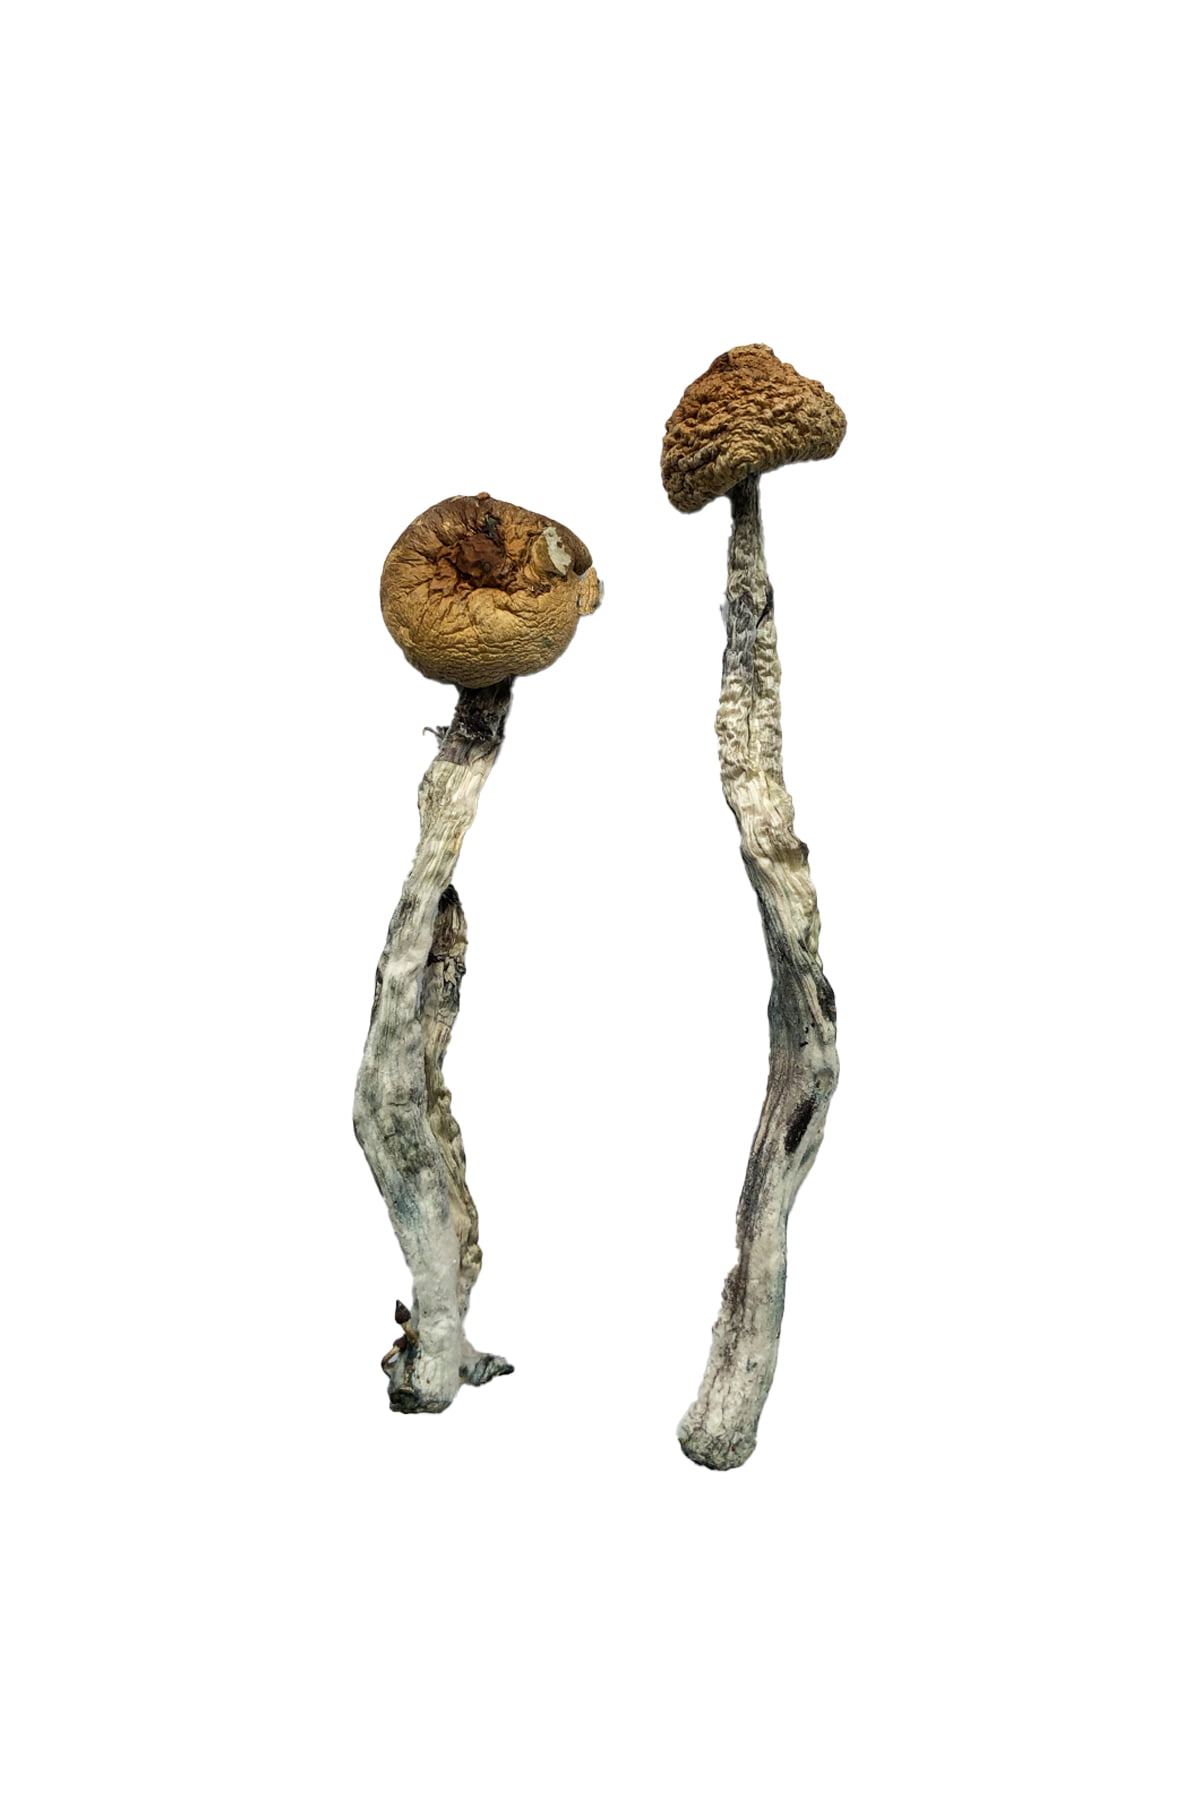 Buy Z-Strain Magic Mushrooms online